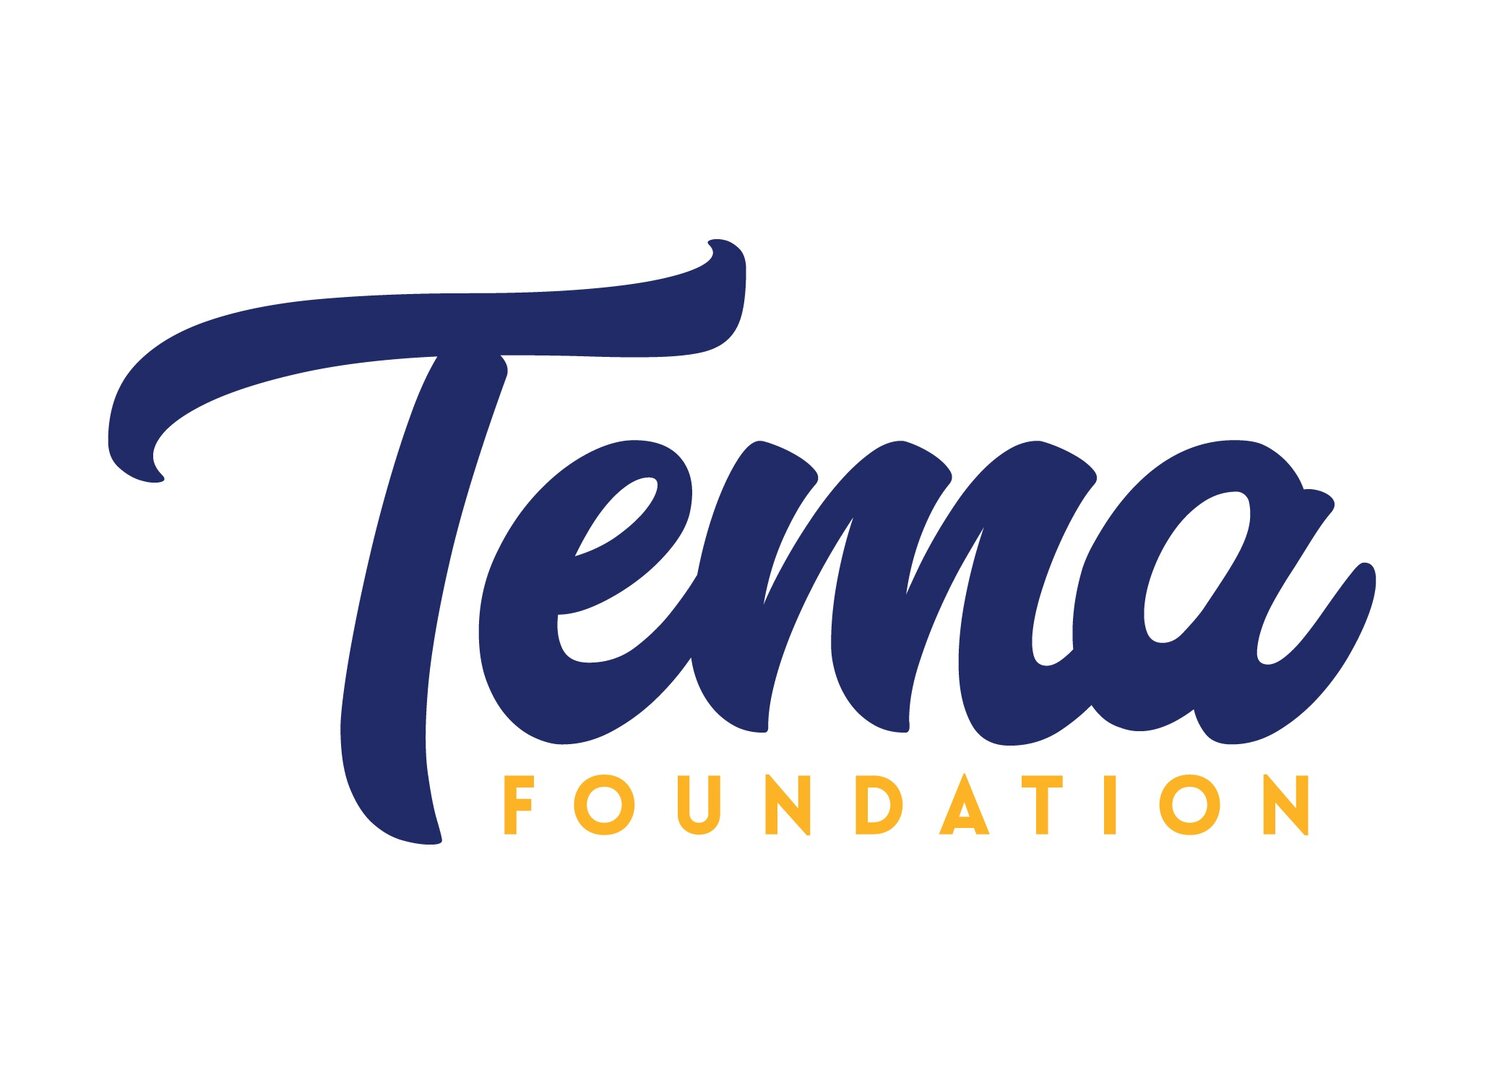 The Tema Foundation